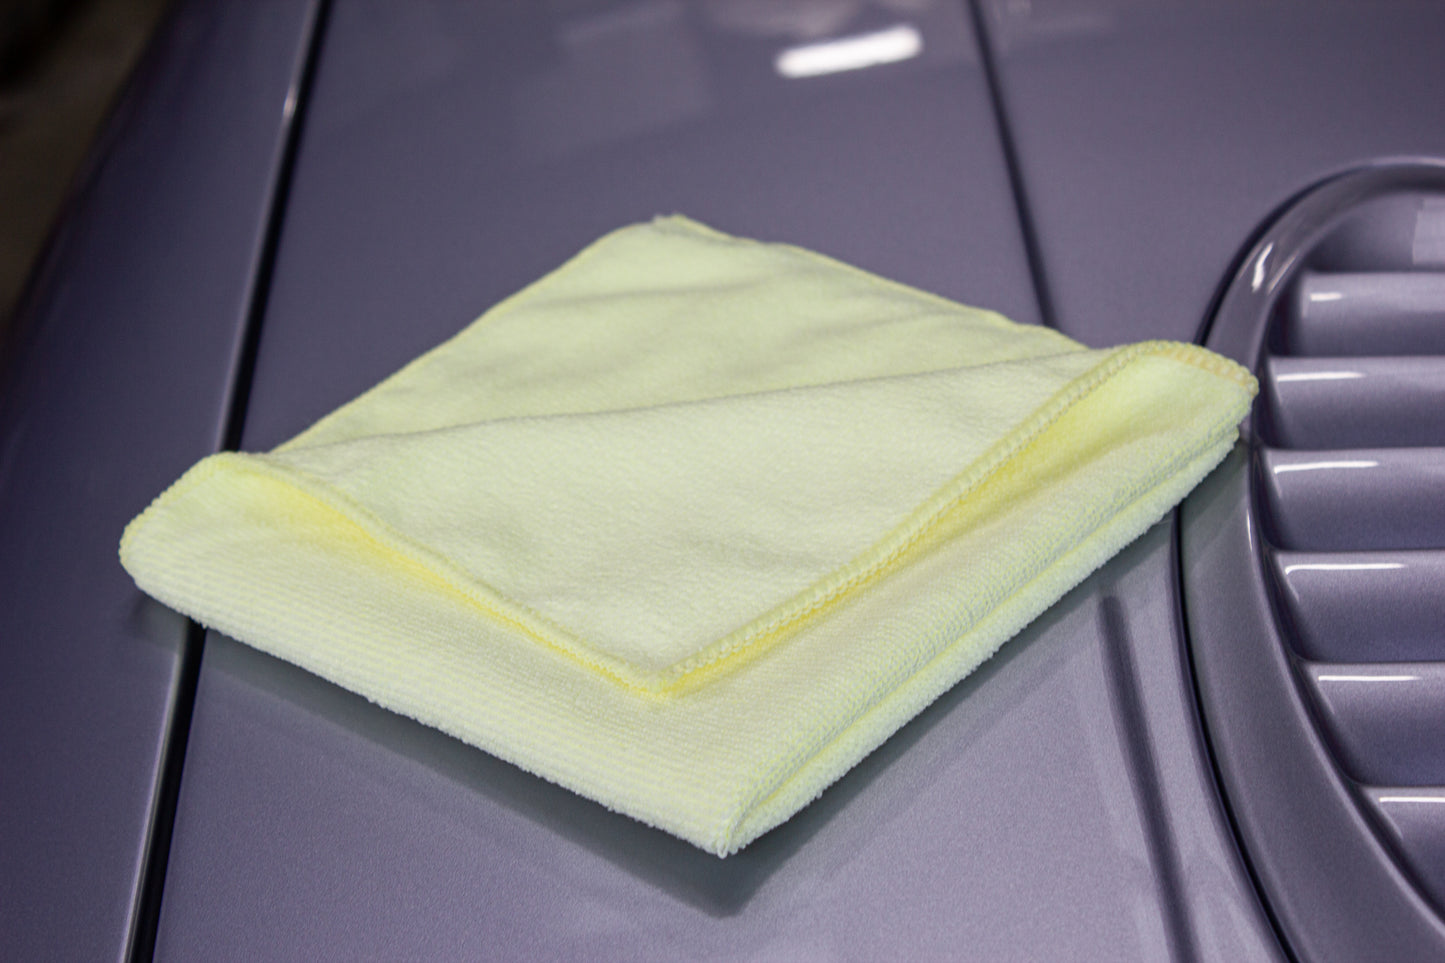 All Rounder Yellow (x10) Microfibre Towel, 40cm x 40cm